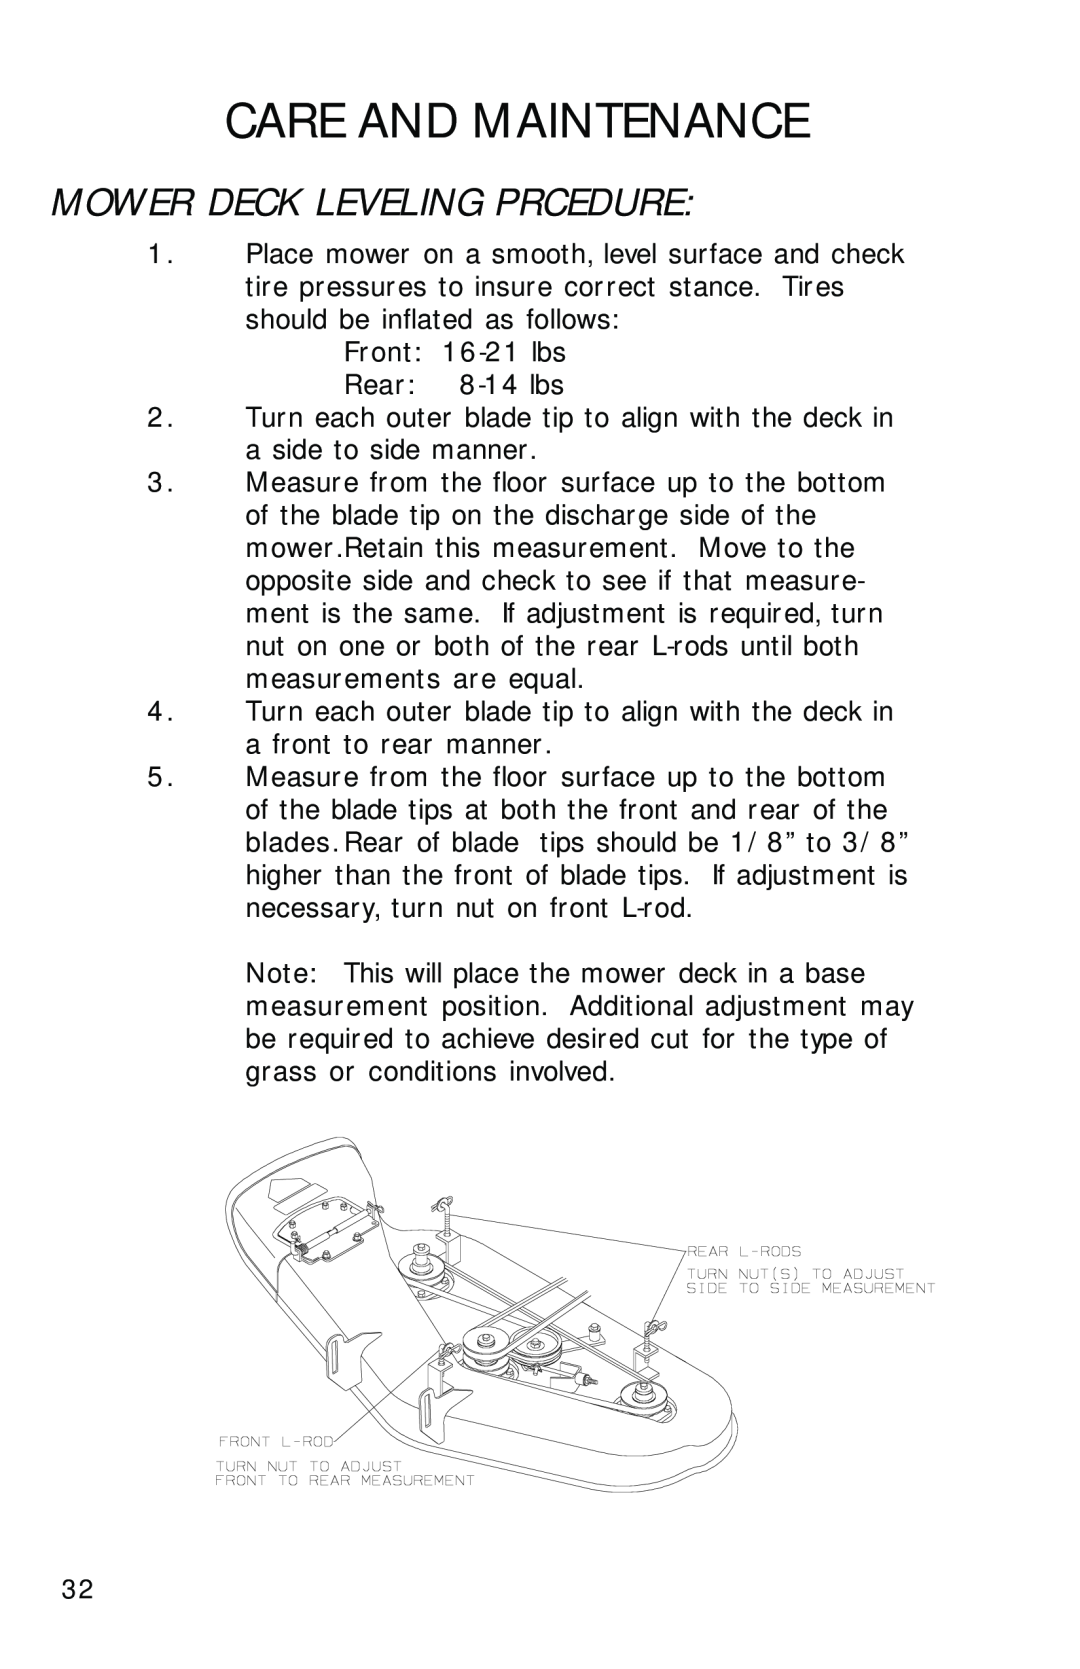 Dixon ZTR 2002 manual Mower Deck Leveling Prcedure, Care And Maintenance 